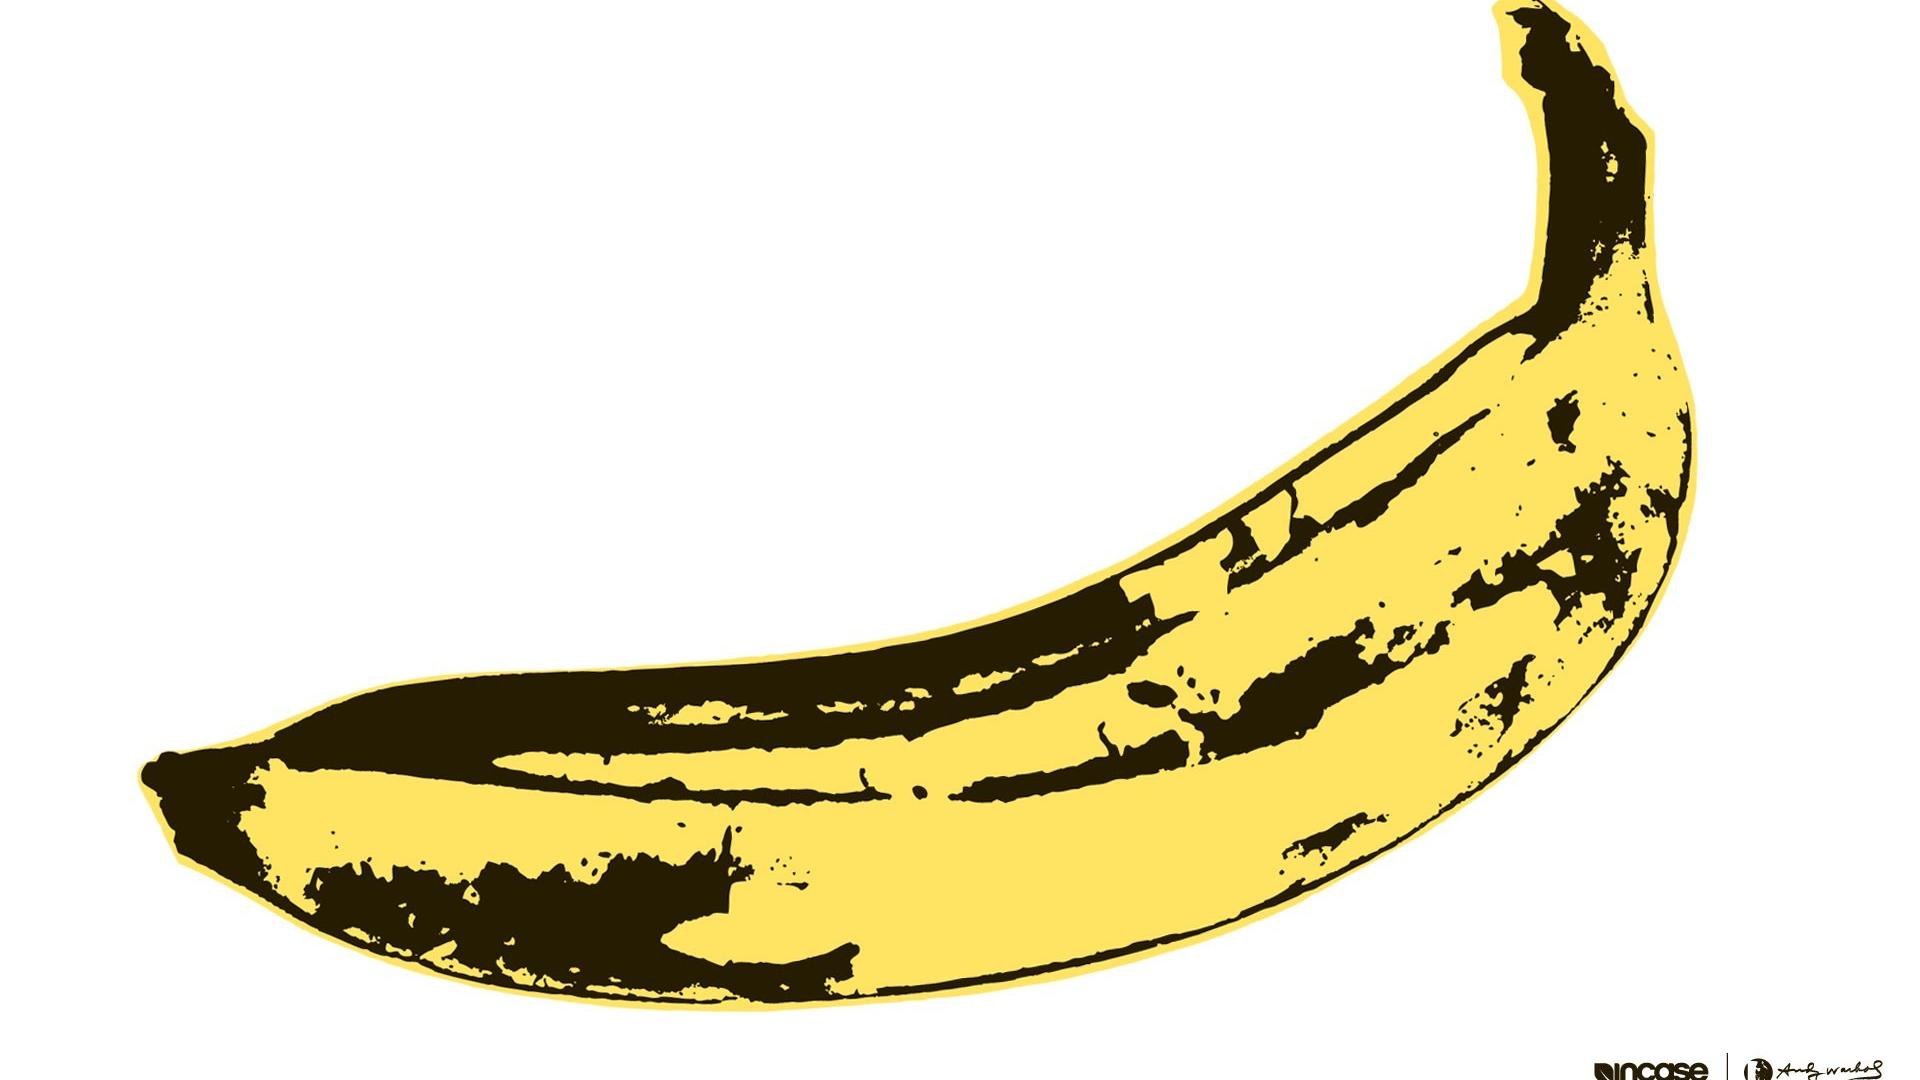 Wallpapers Andy Warhol Bananas Velvet Underground Incase Us Com ...